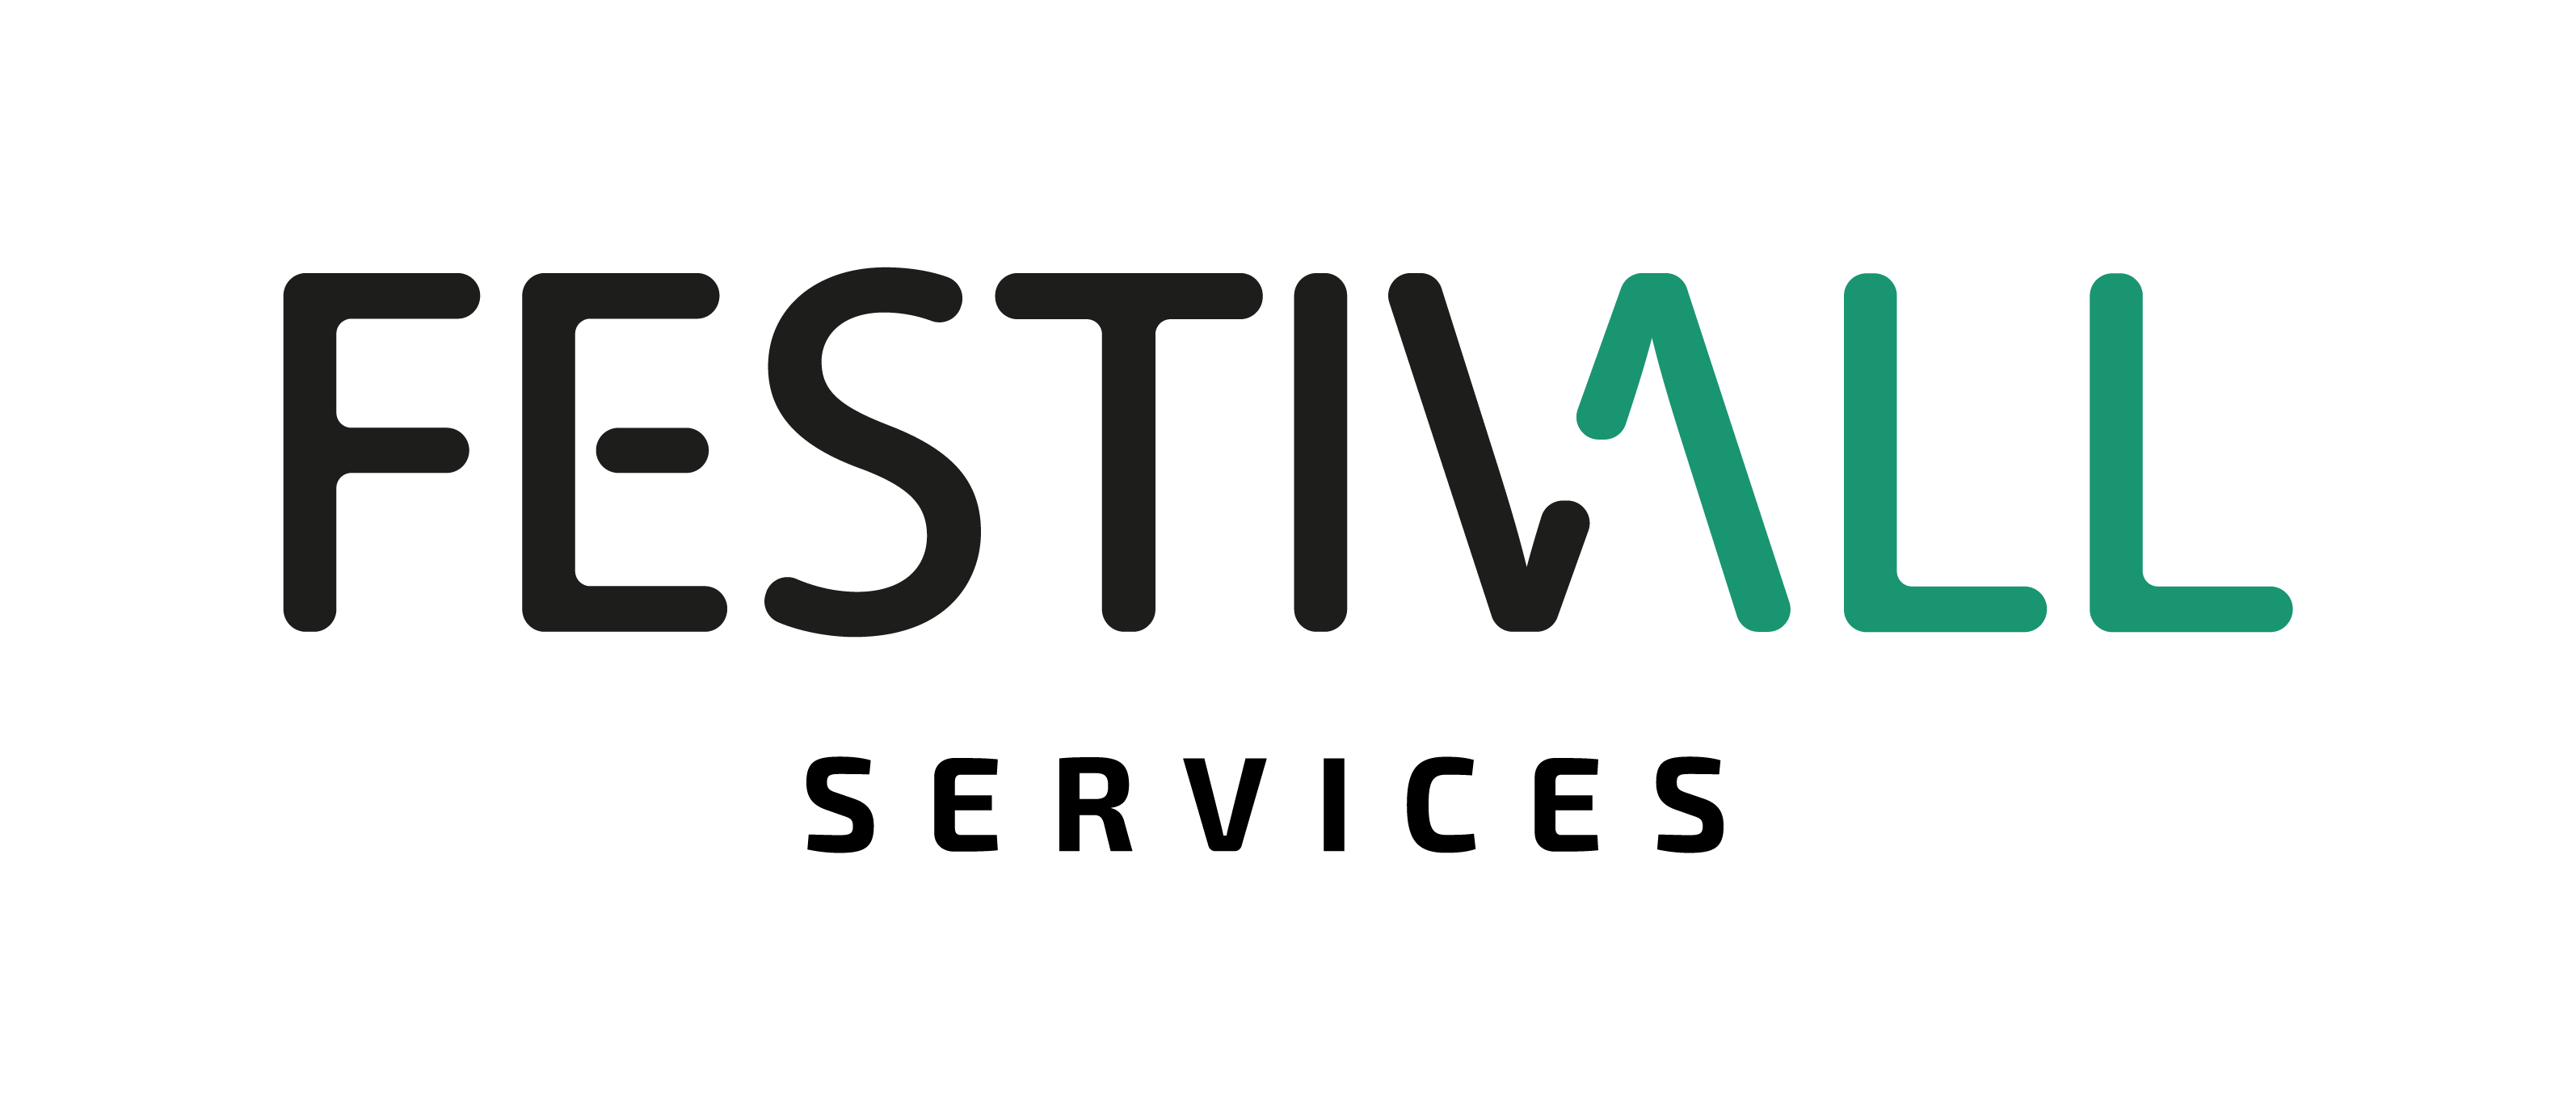 logo for Festivall Services